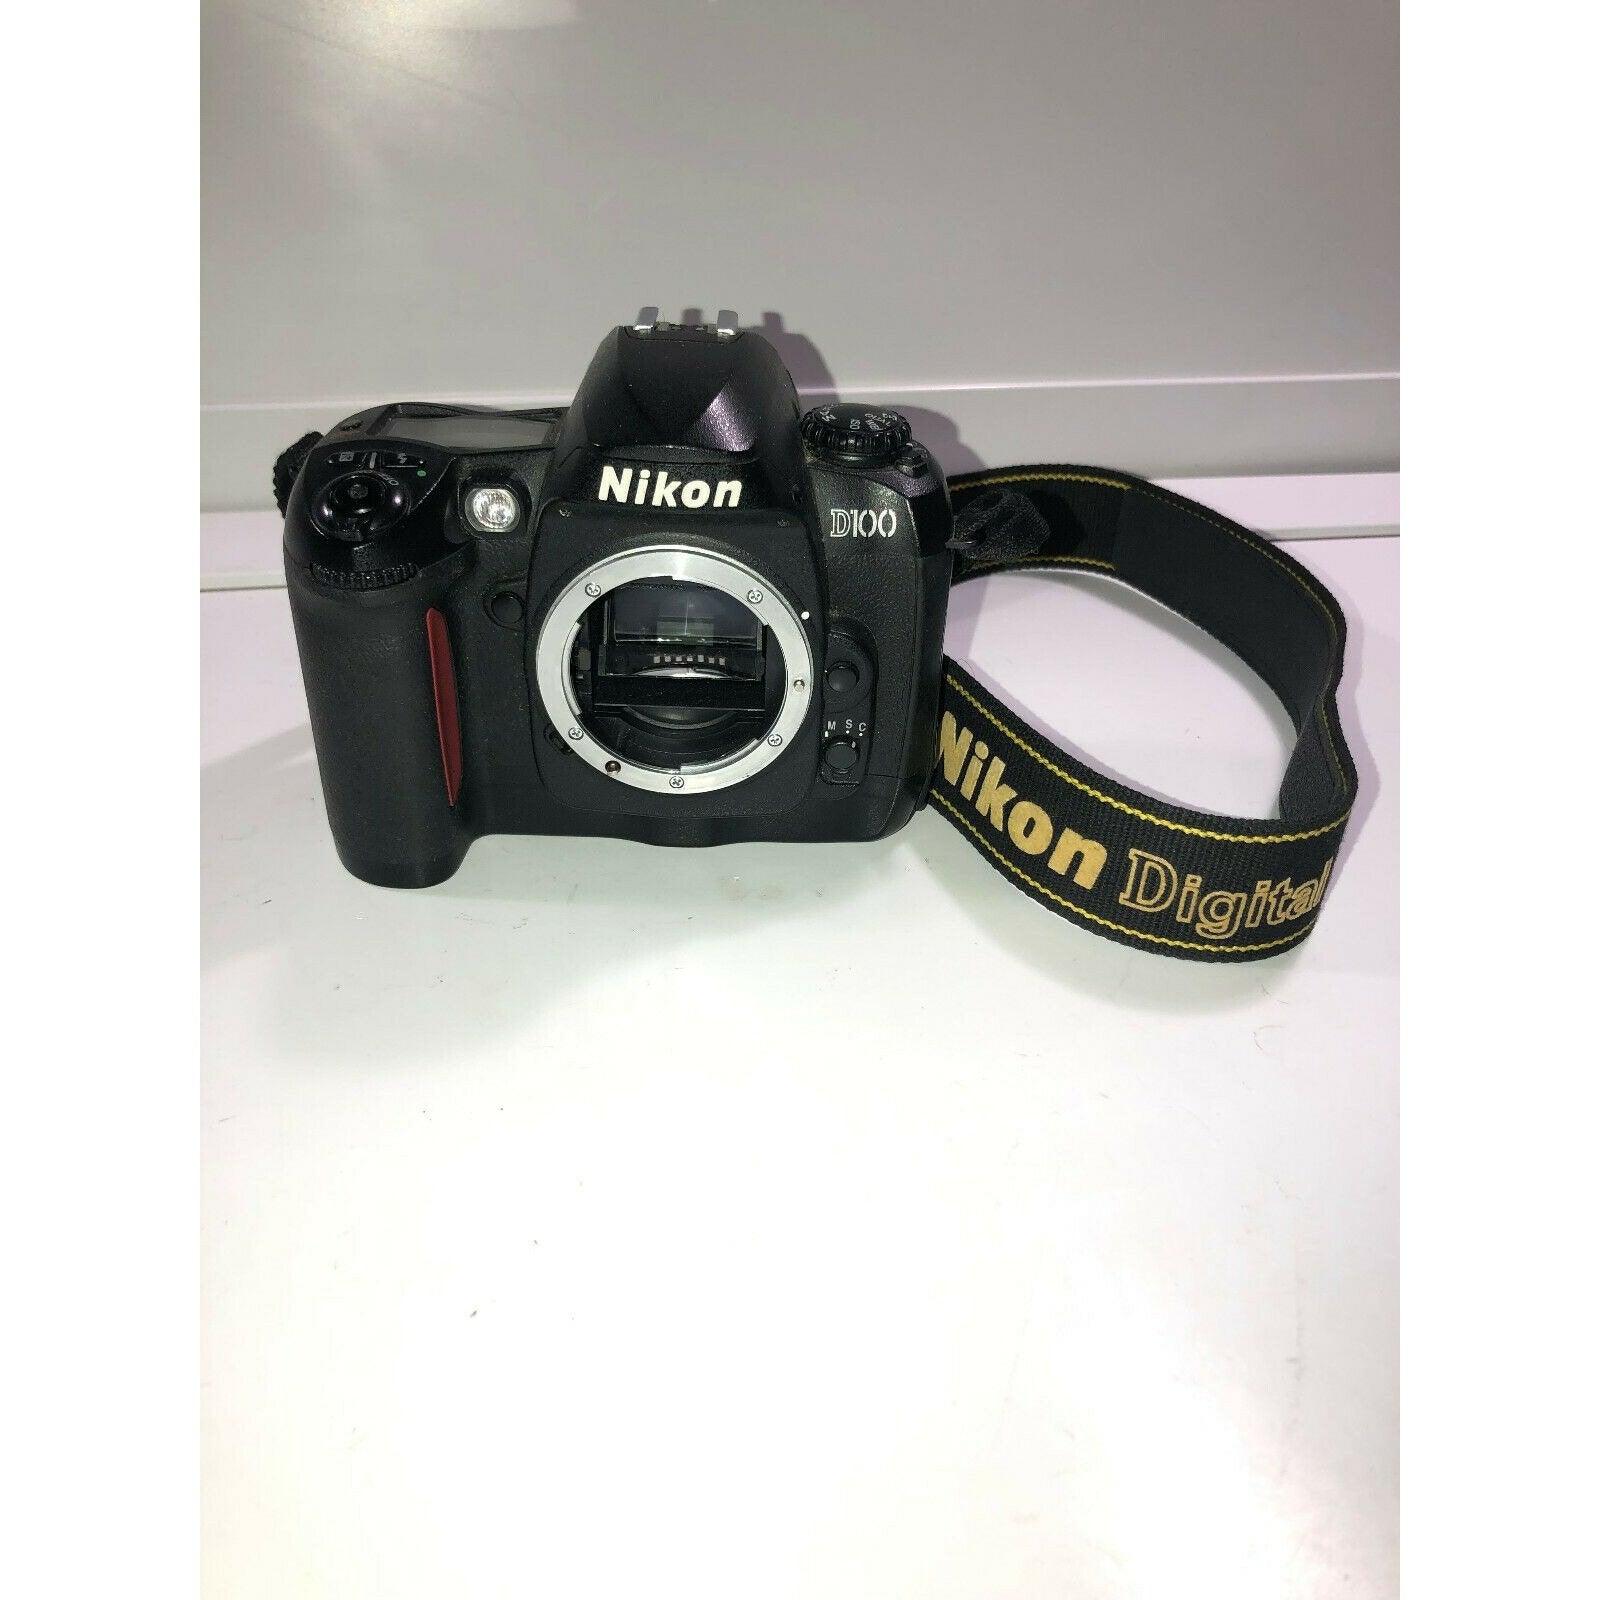 Nikon D100 6.1 MP Digital SLR Camera Black Body Only